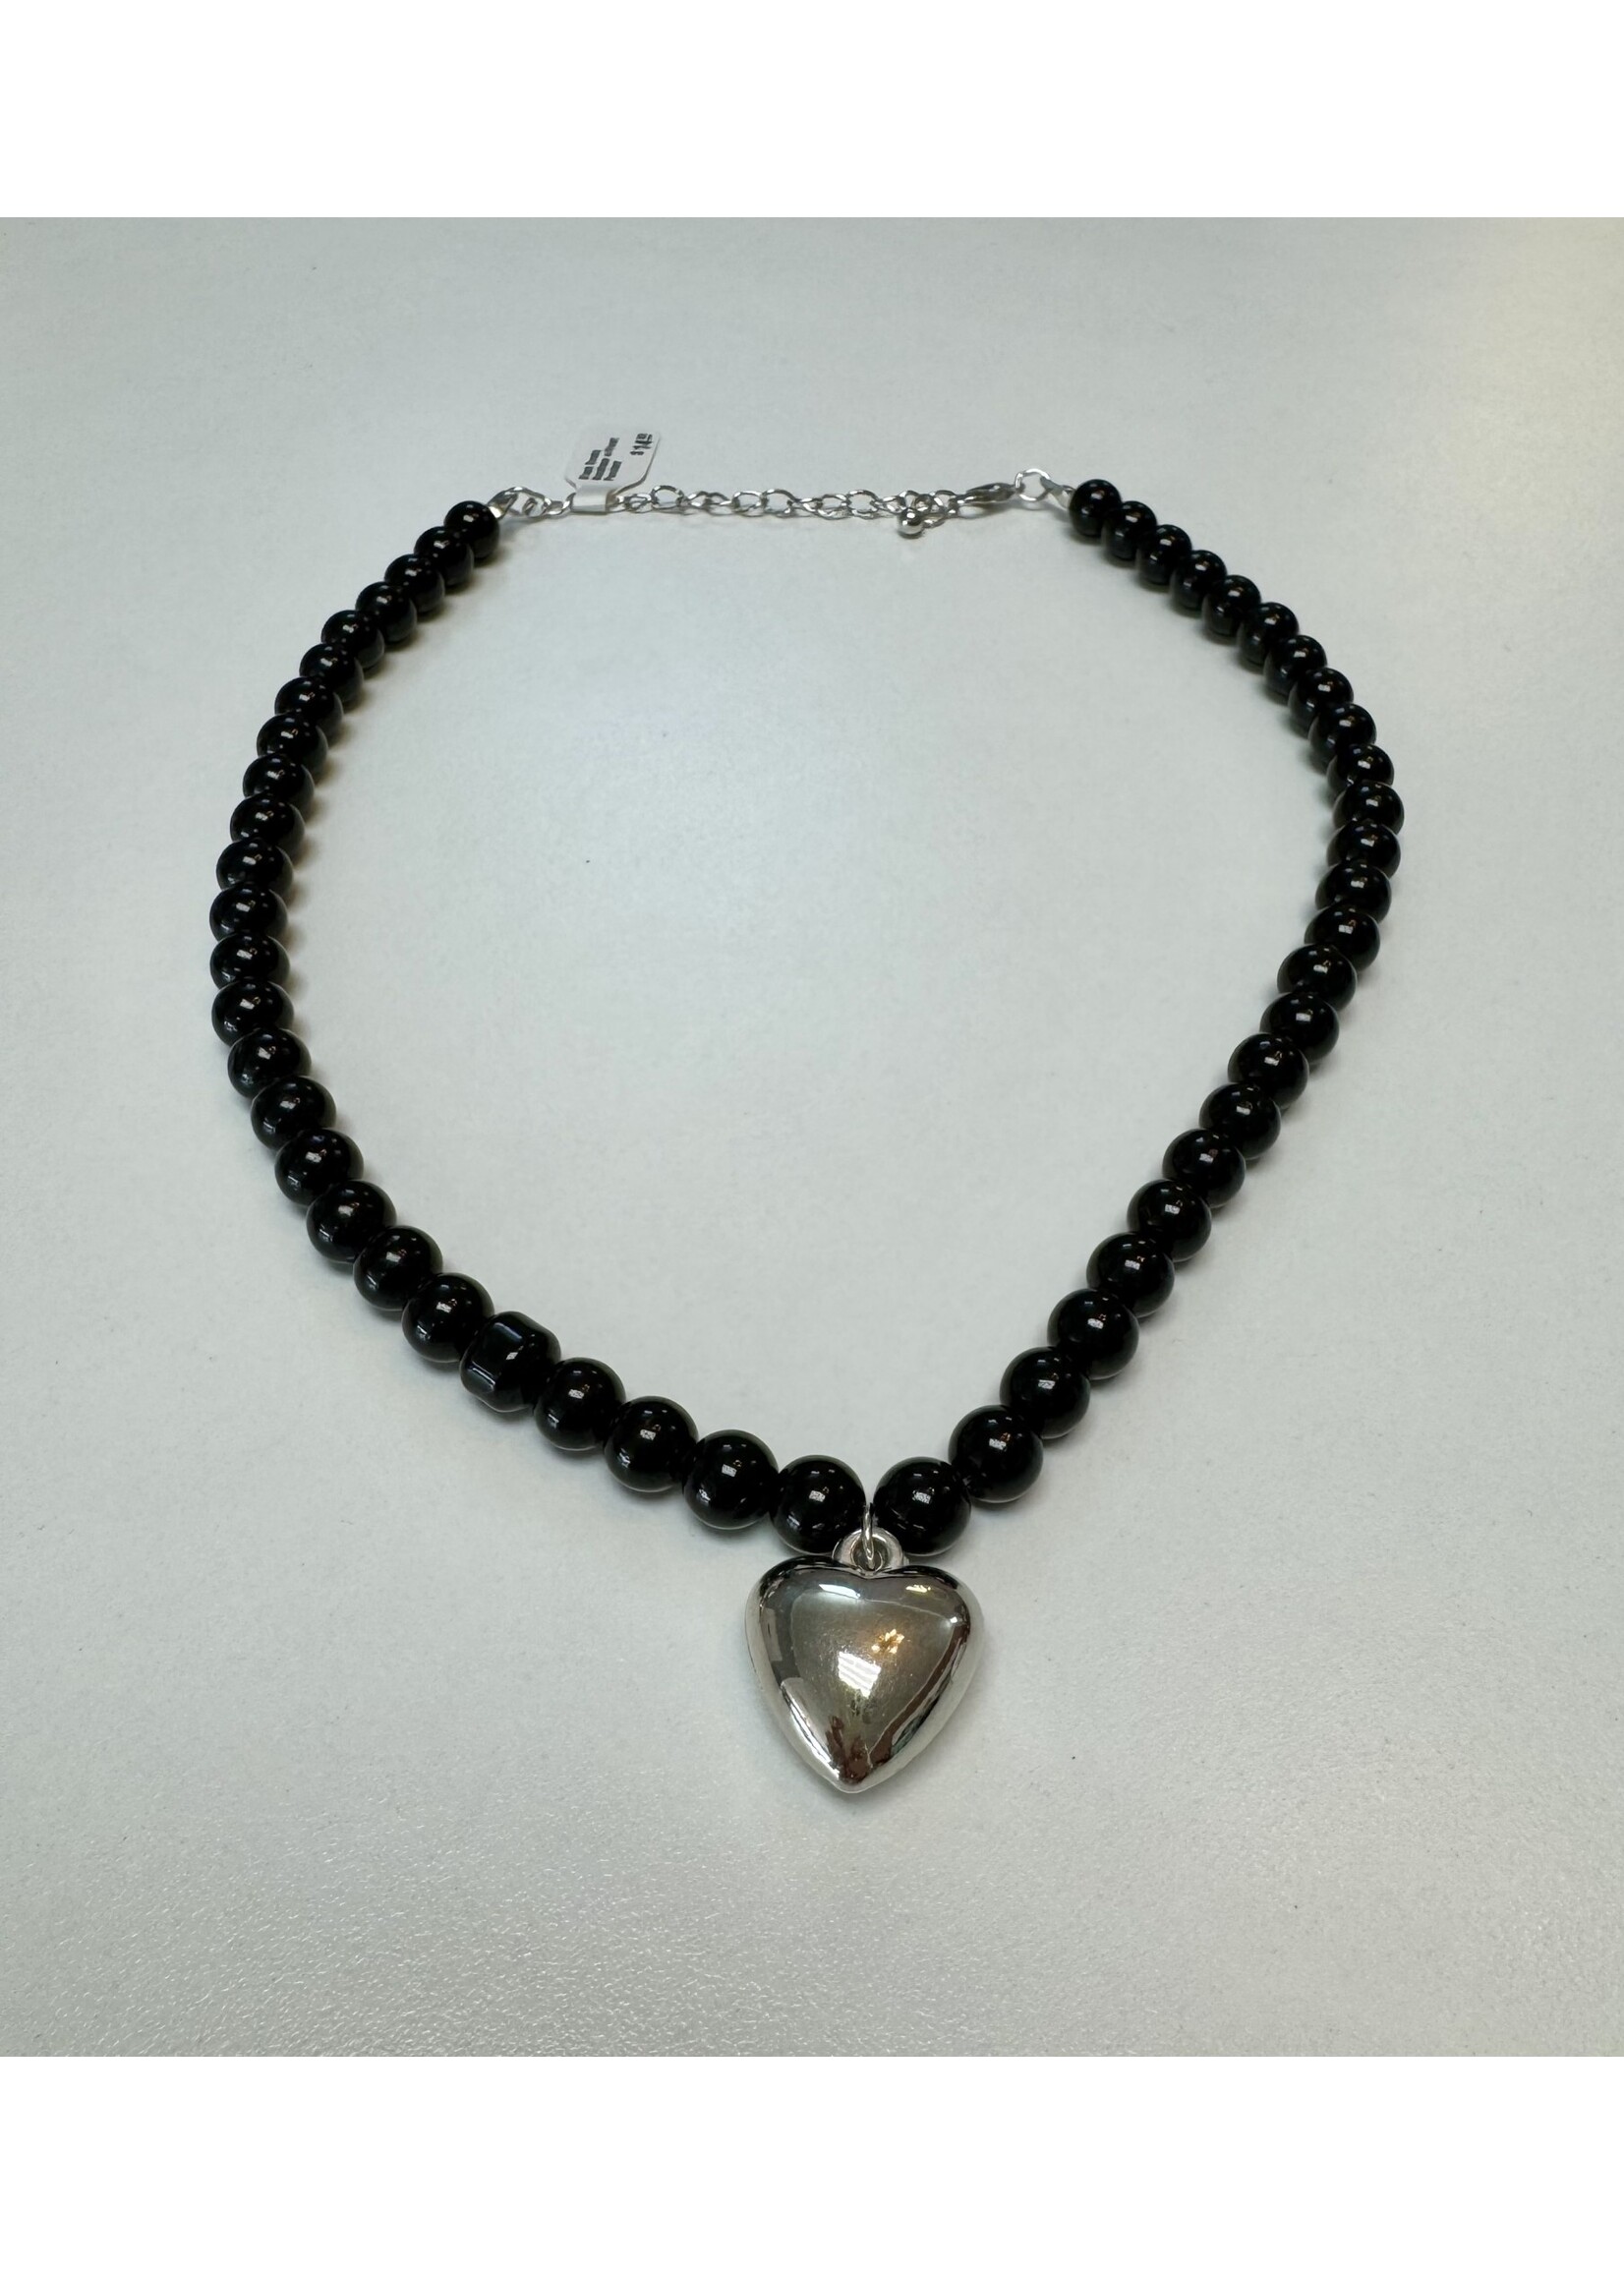 Black Beads Necklace w/Heart Pendant